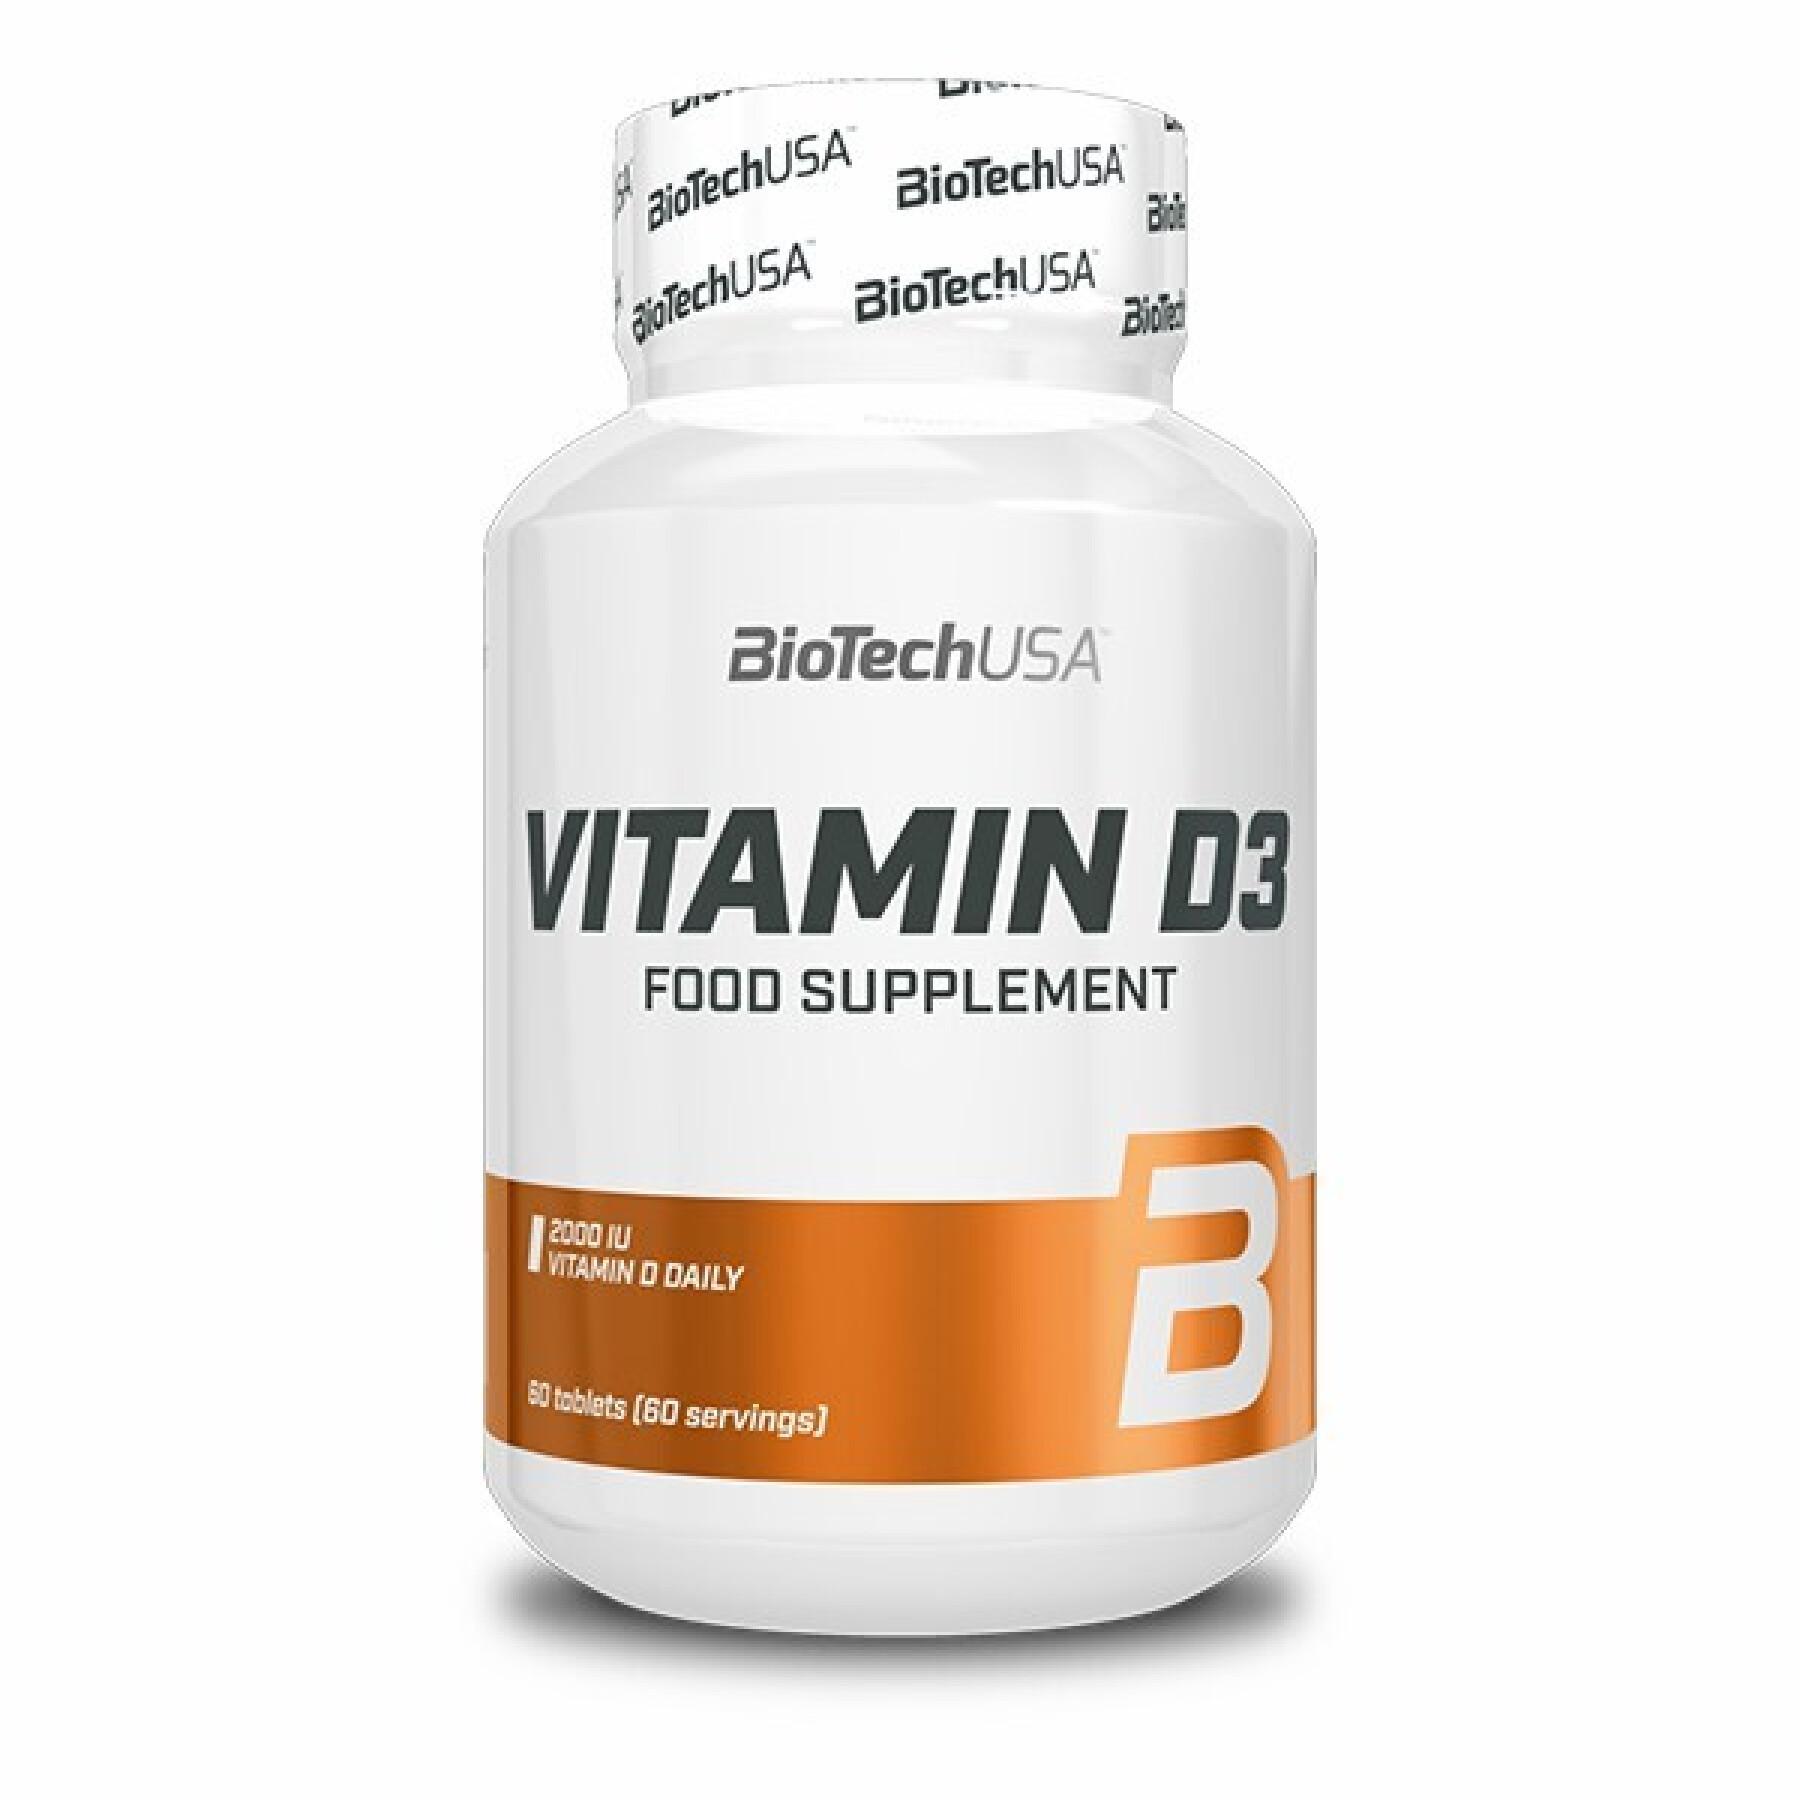 Topf mit Nahrungsergänzungsmitteln 60 Tabletten Biotech USA Vitamin D3 50mcg